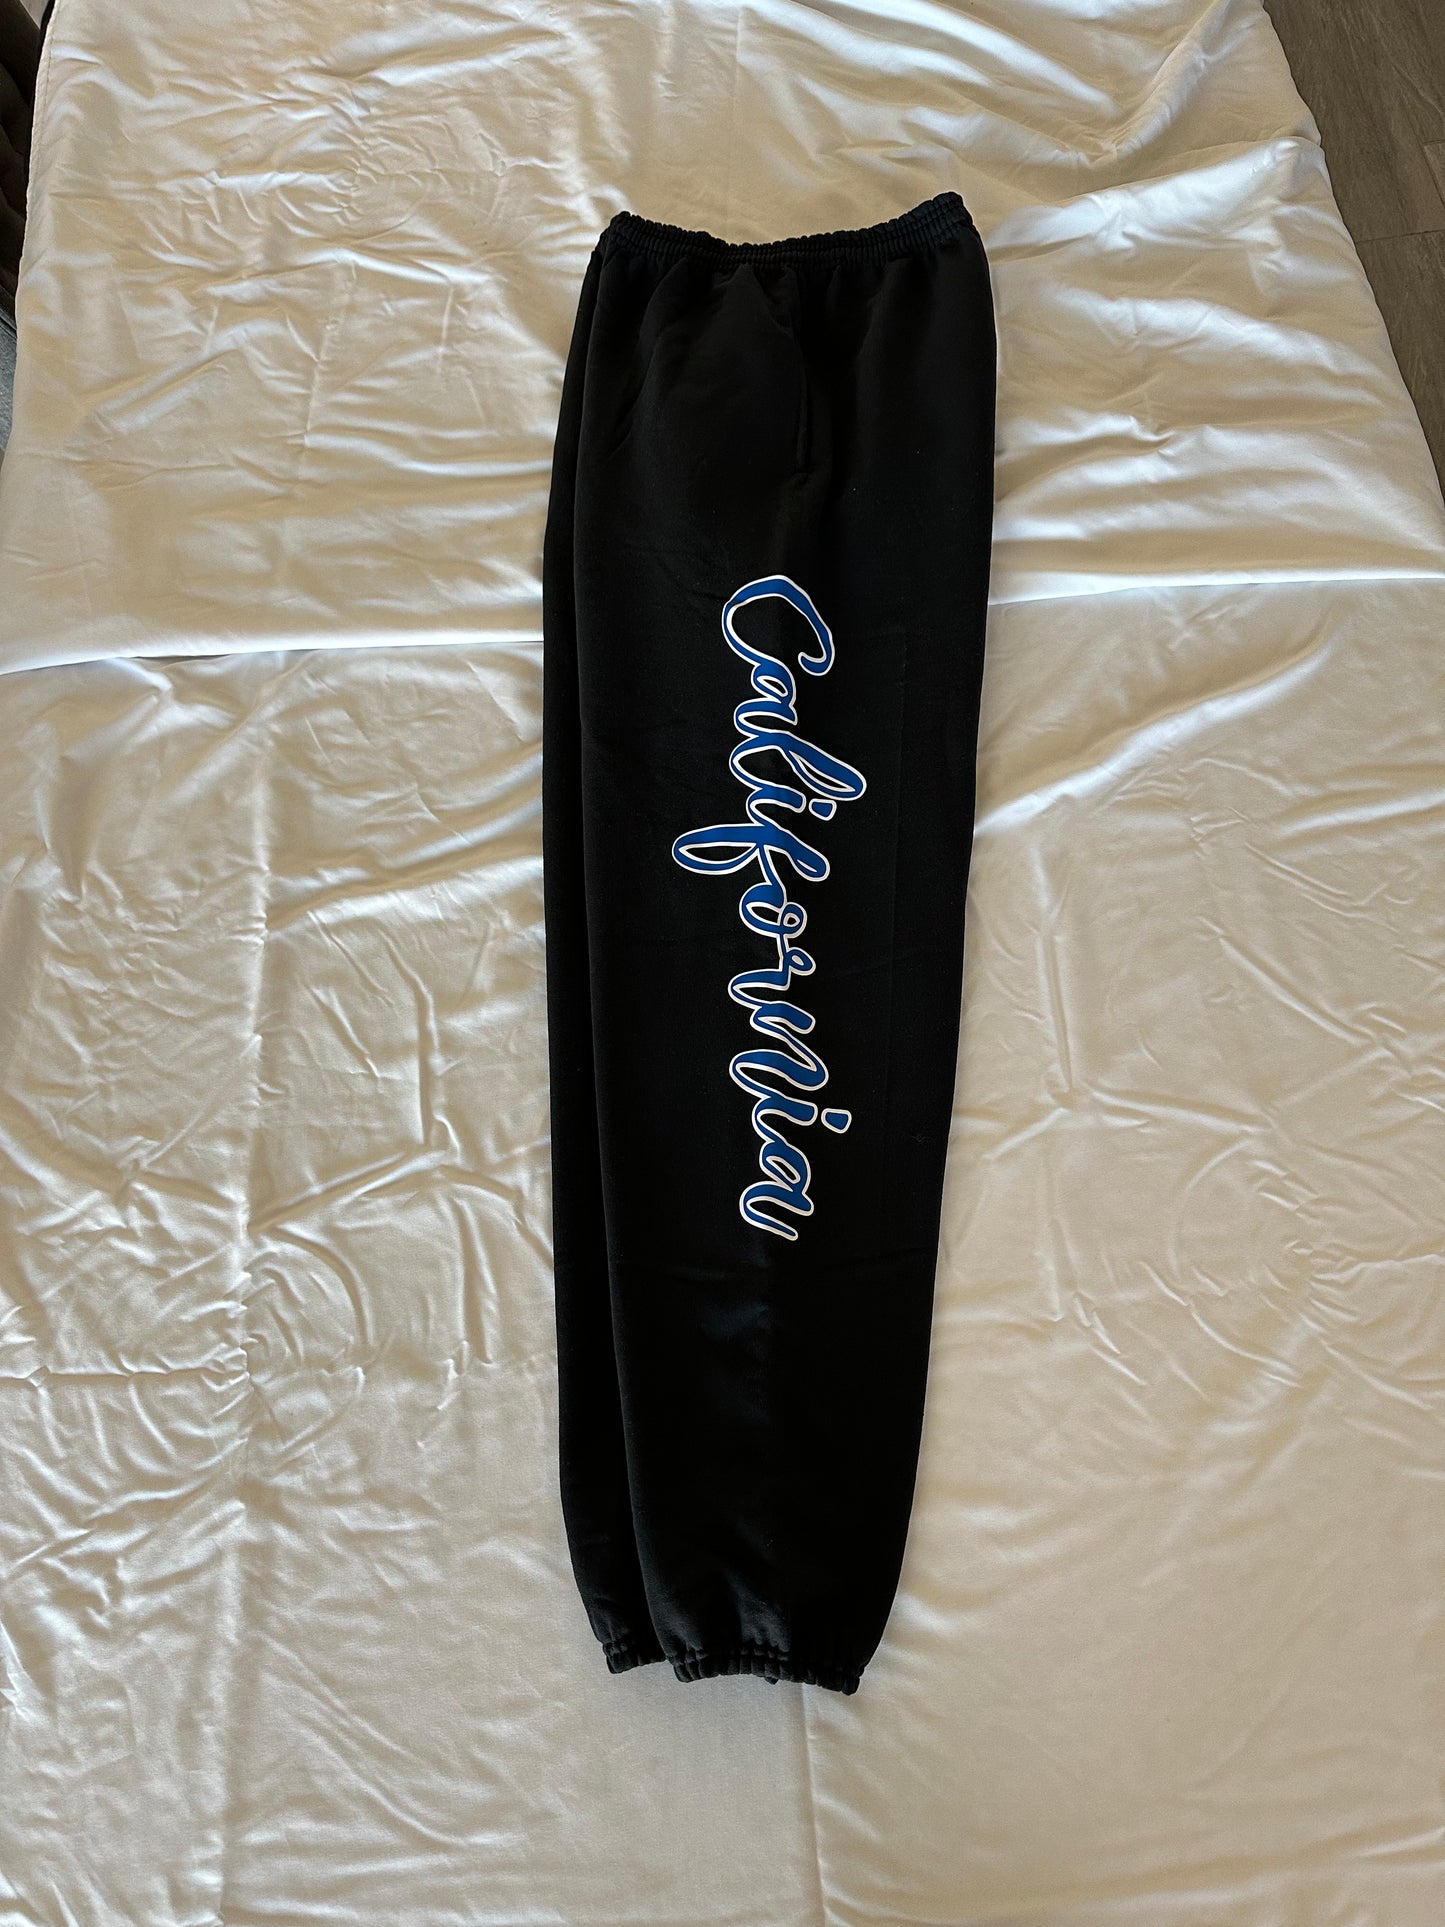 Black Sweatpants with "California" Design